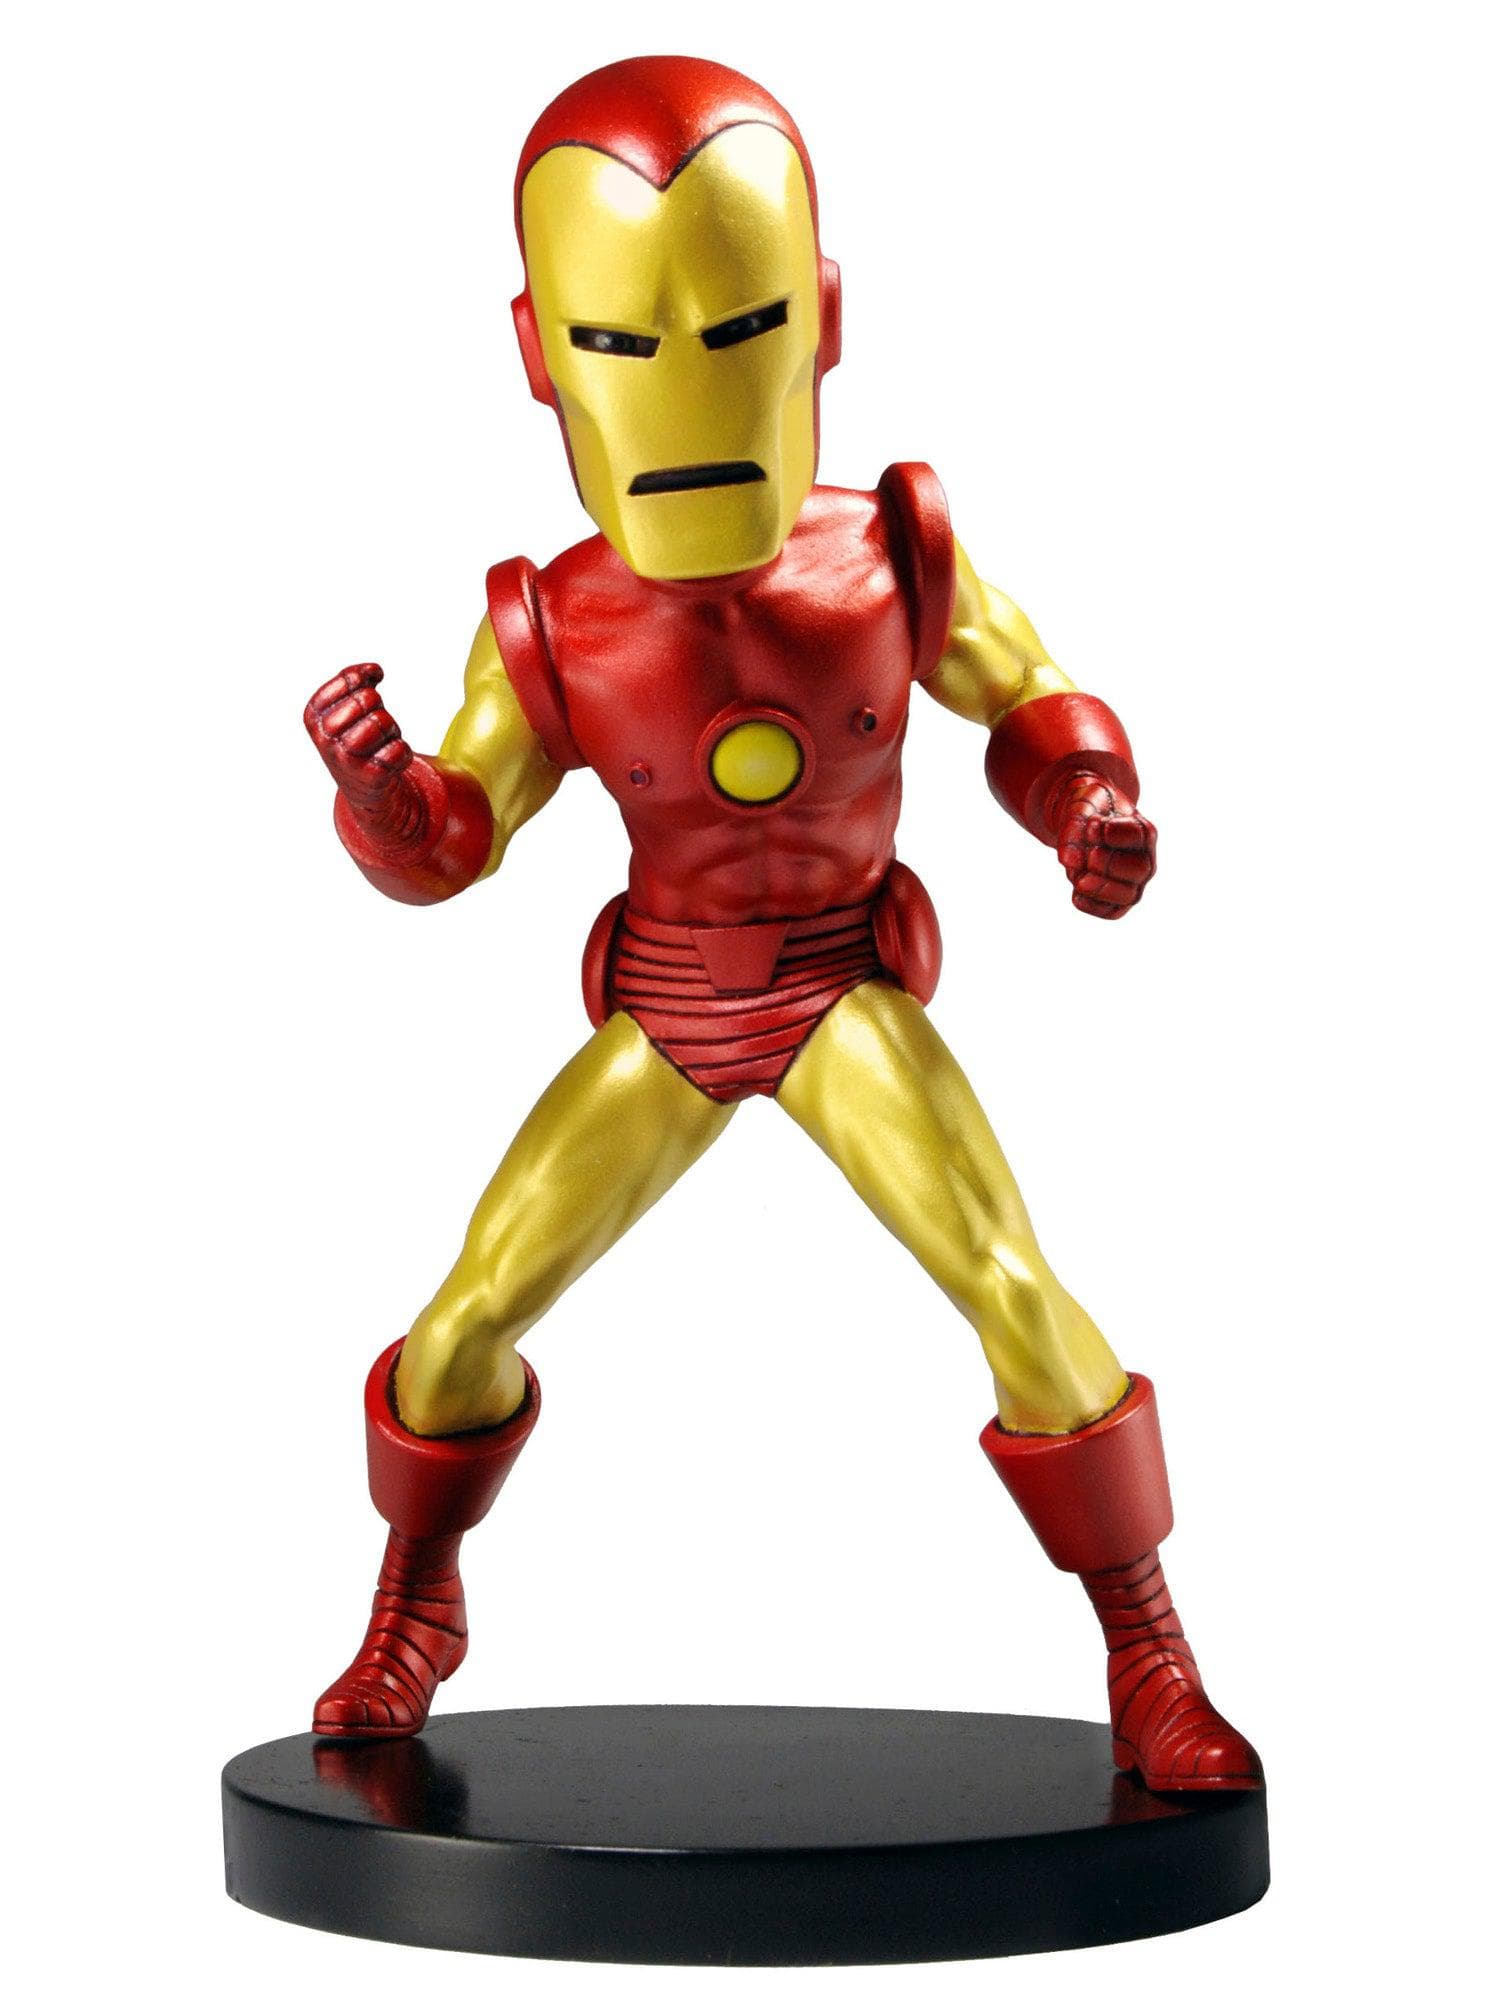 NECA - Marvel - Iron Man Head Knocker - costumes.com